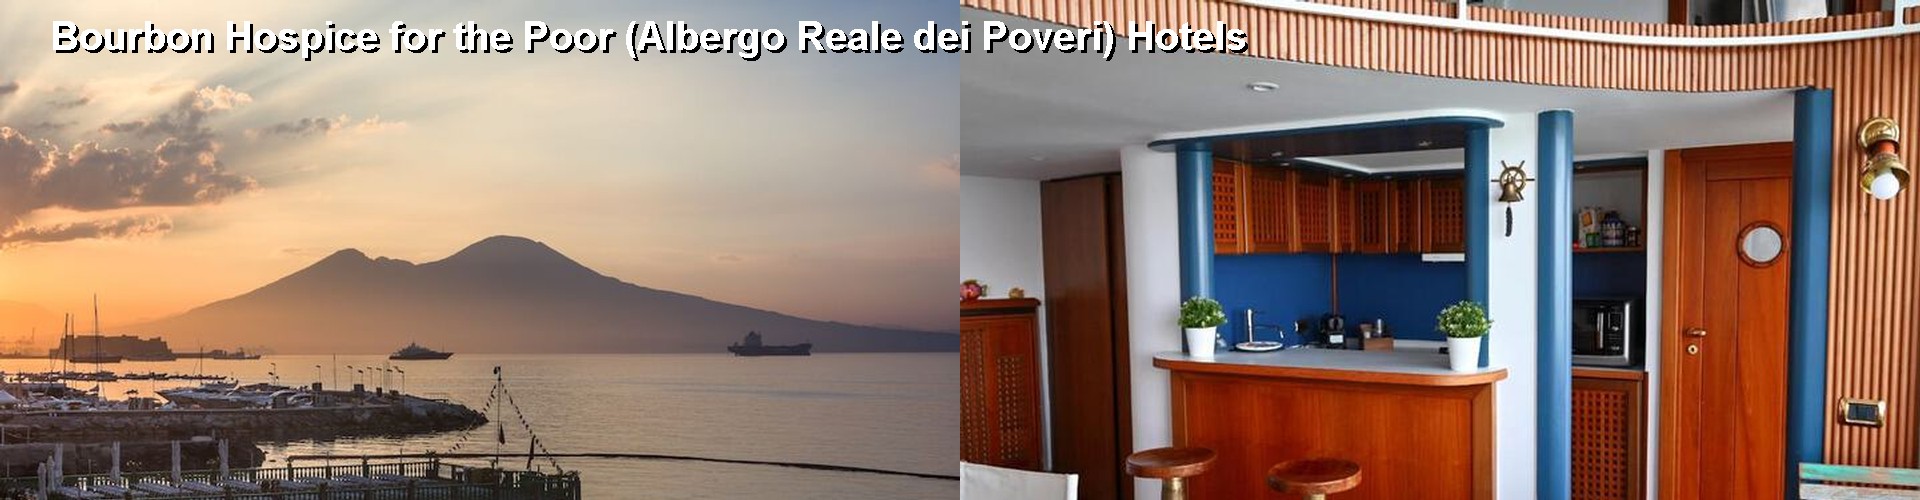 2 Best Hotels near Bourbon Hospice for the Poor (Albergo Reale dei Poveri)